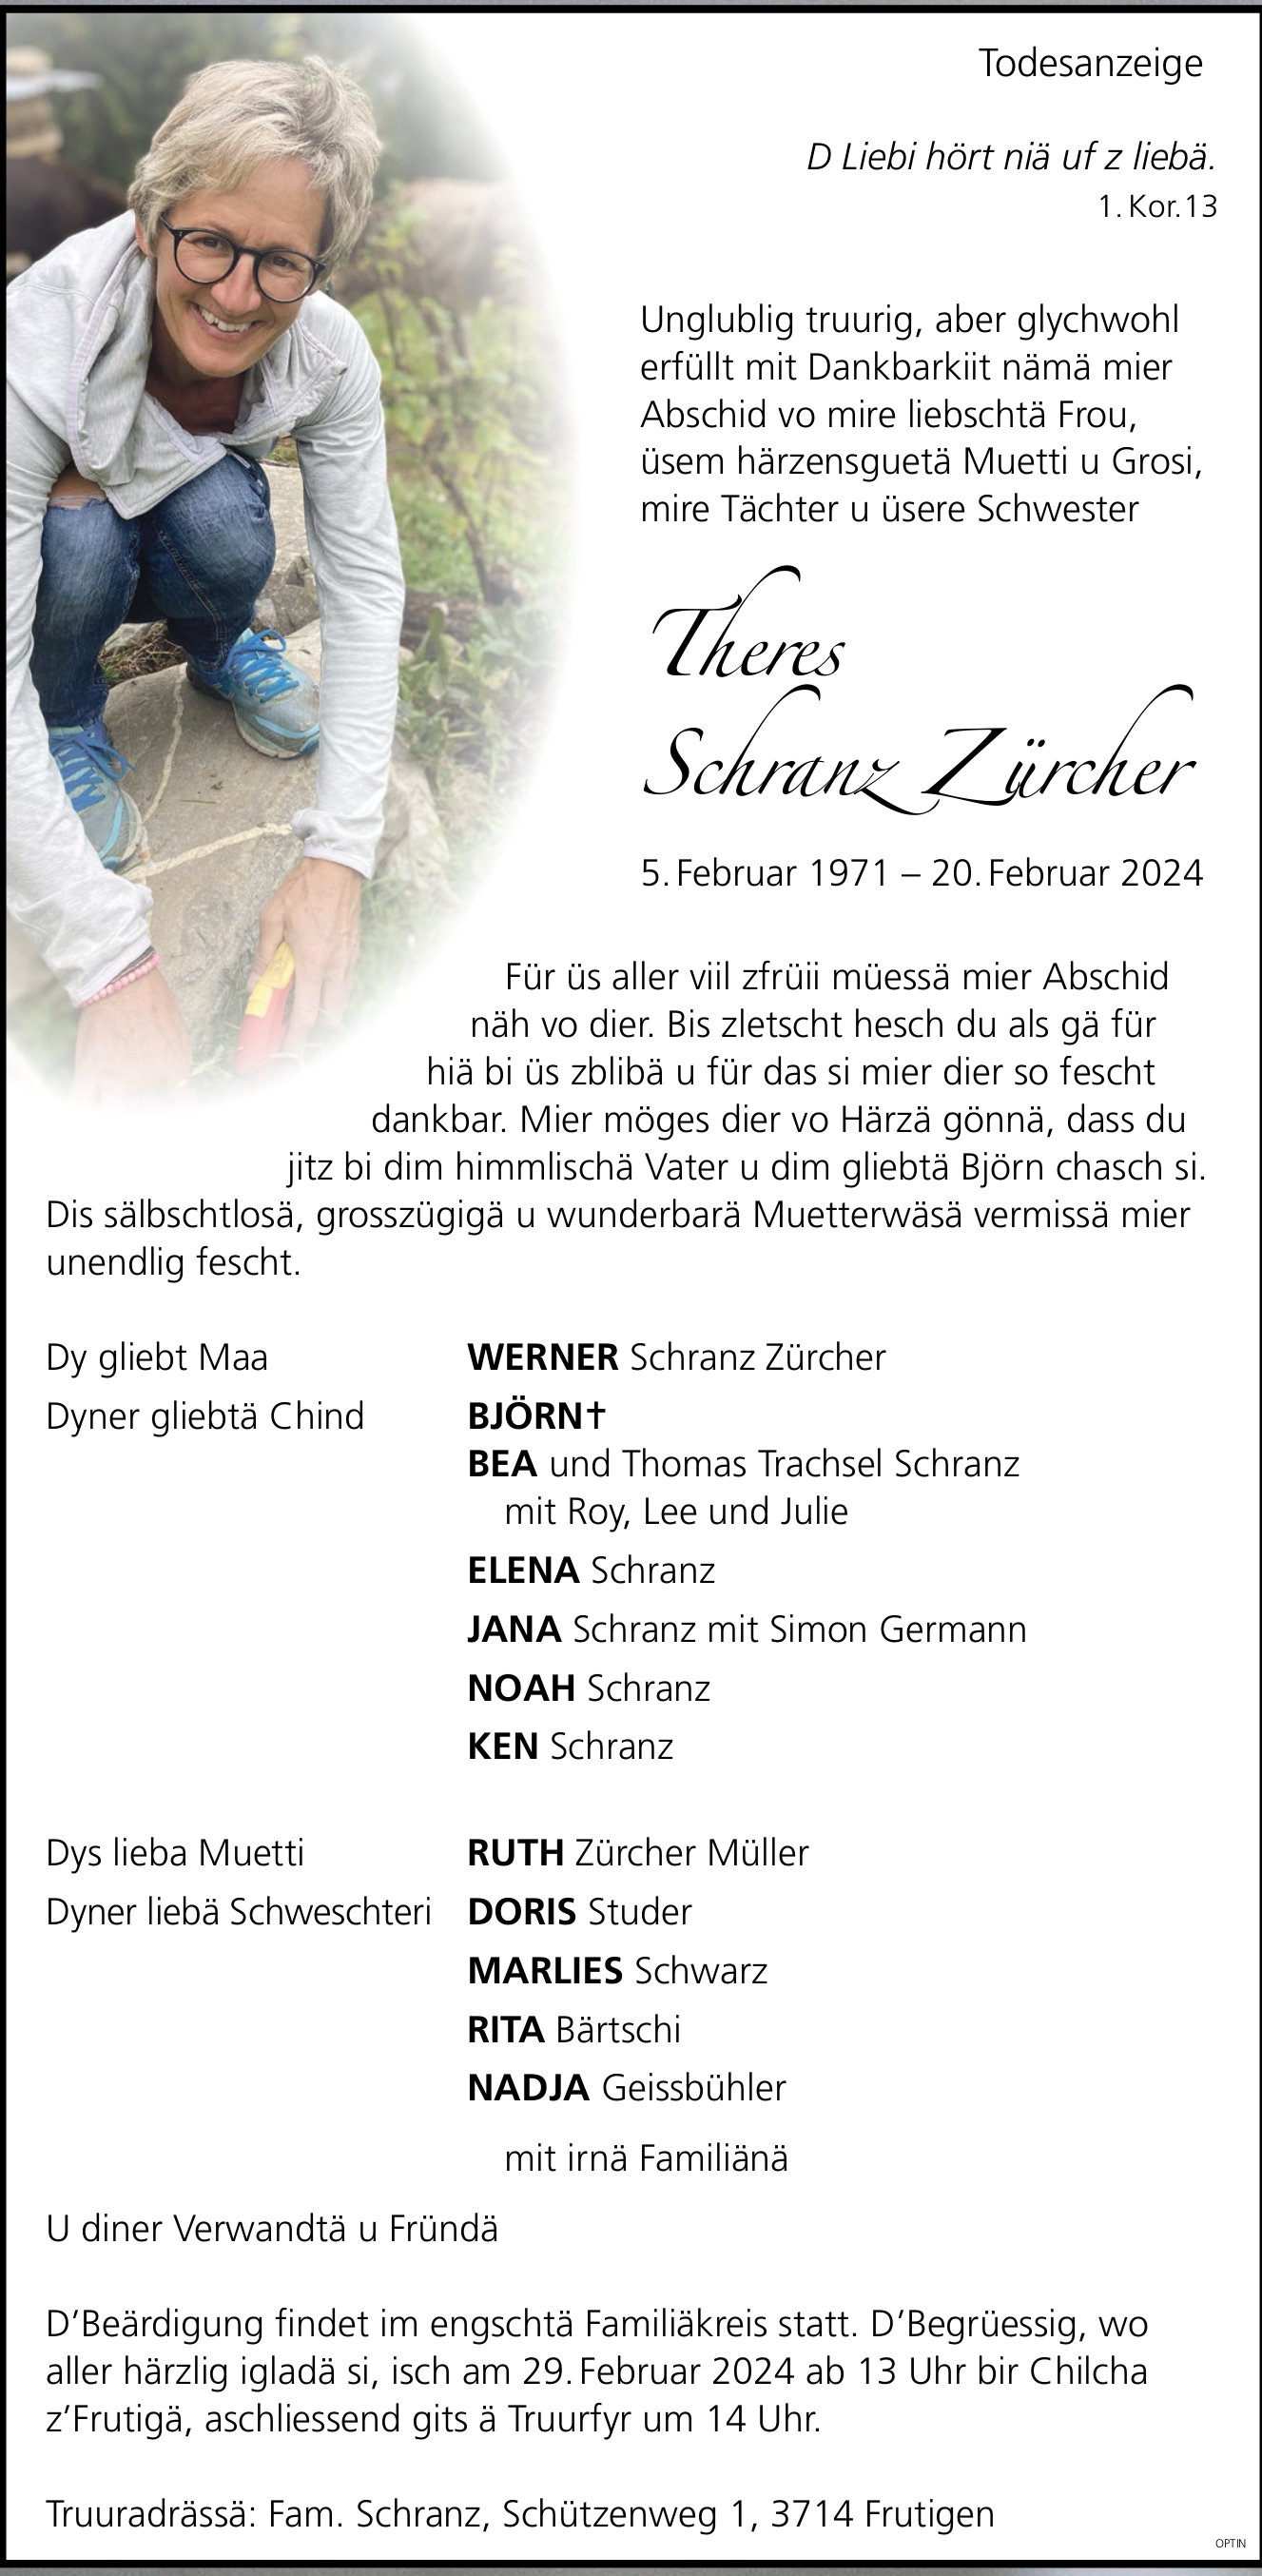 Theres Schranz Zürcher, Februar 2024 / TA